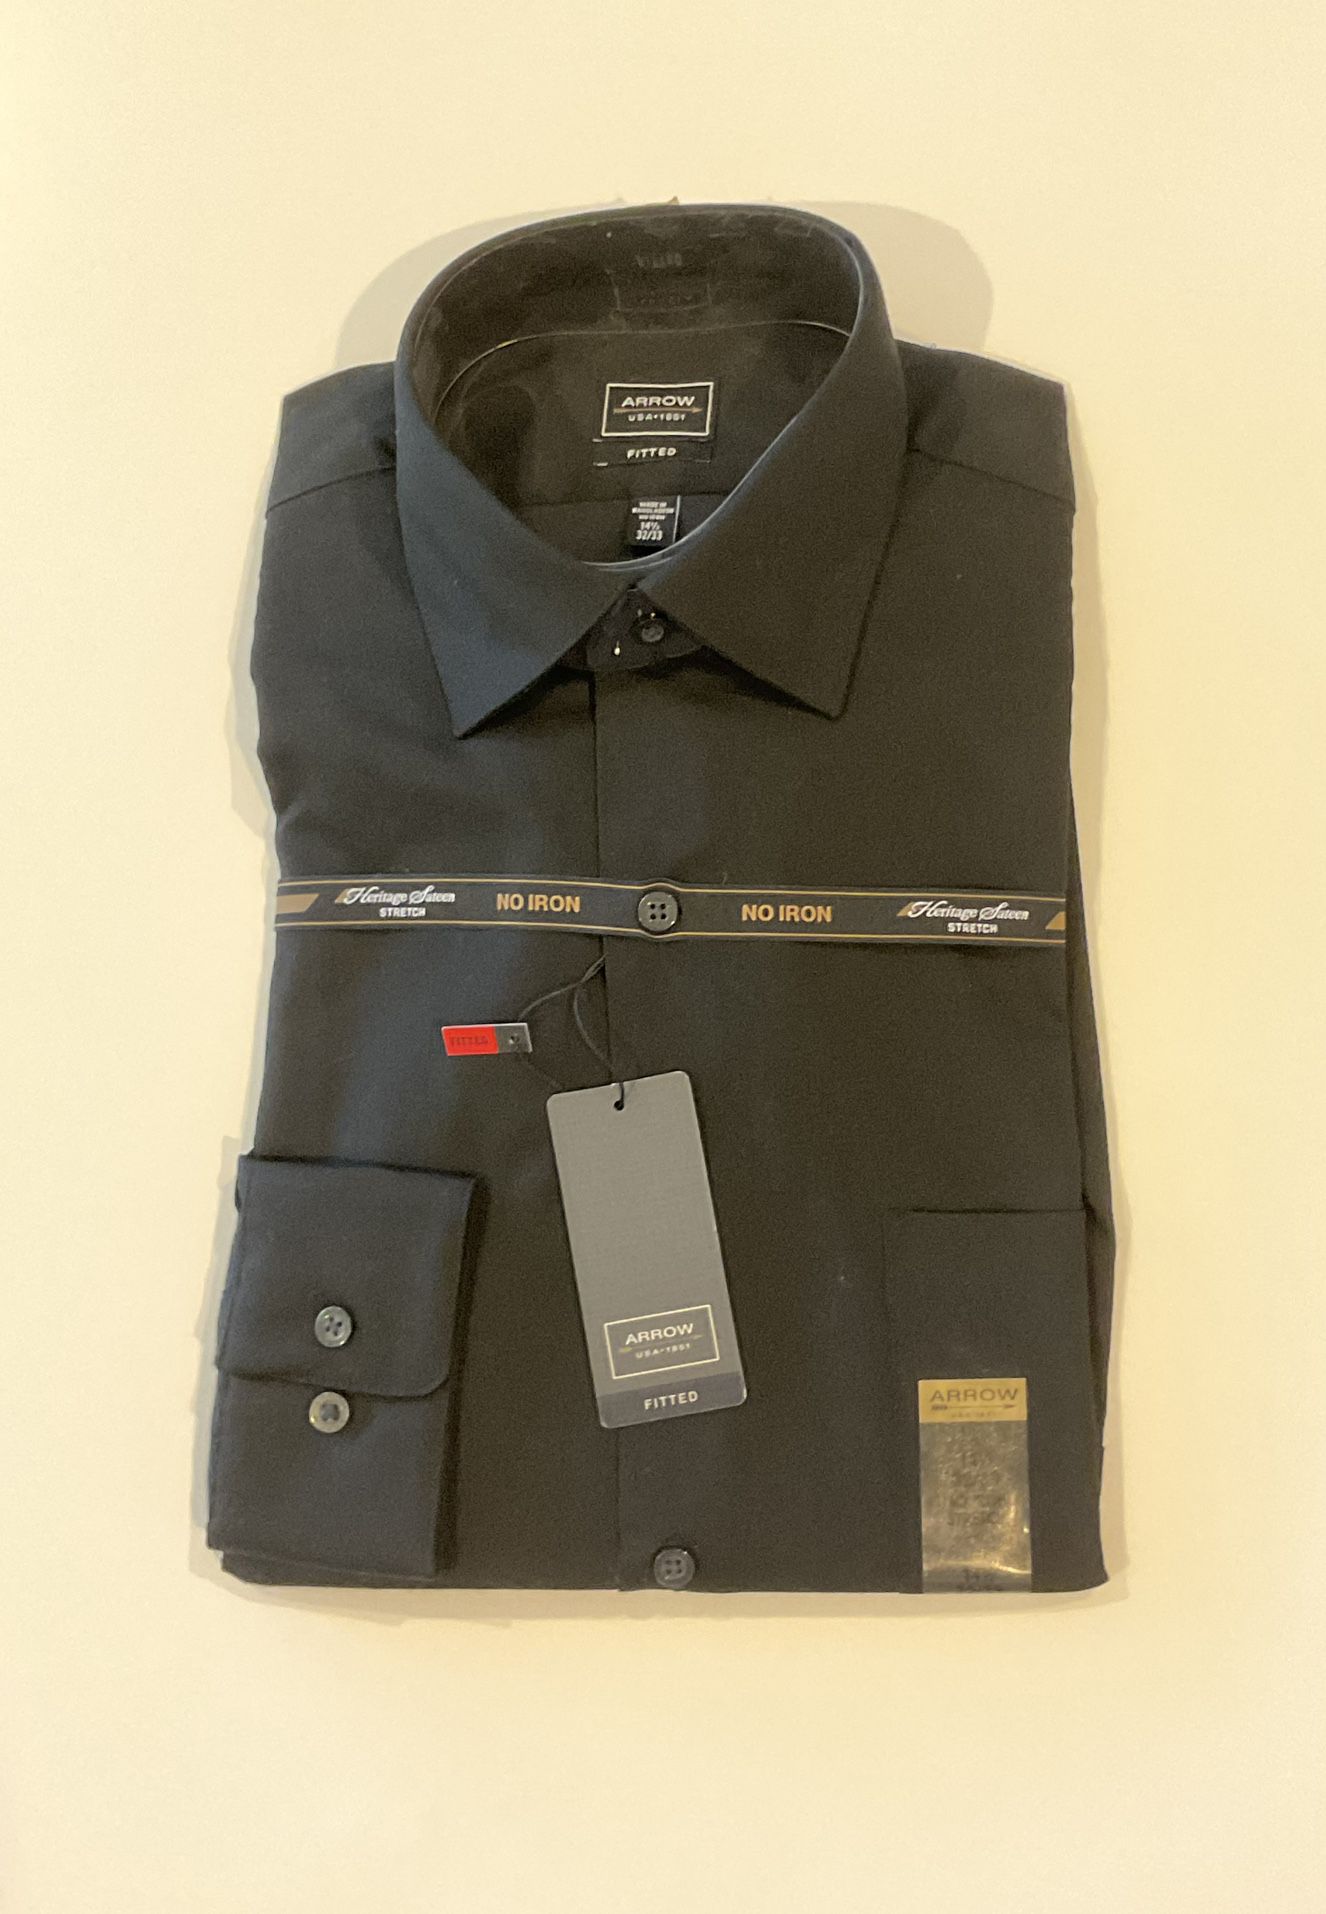 ARROW Fitted No-Iron Men’s Black Long Sleeve Dress Shirt - 14.5” x 32/33